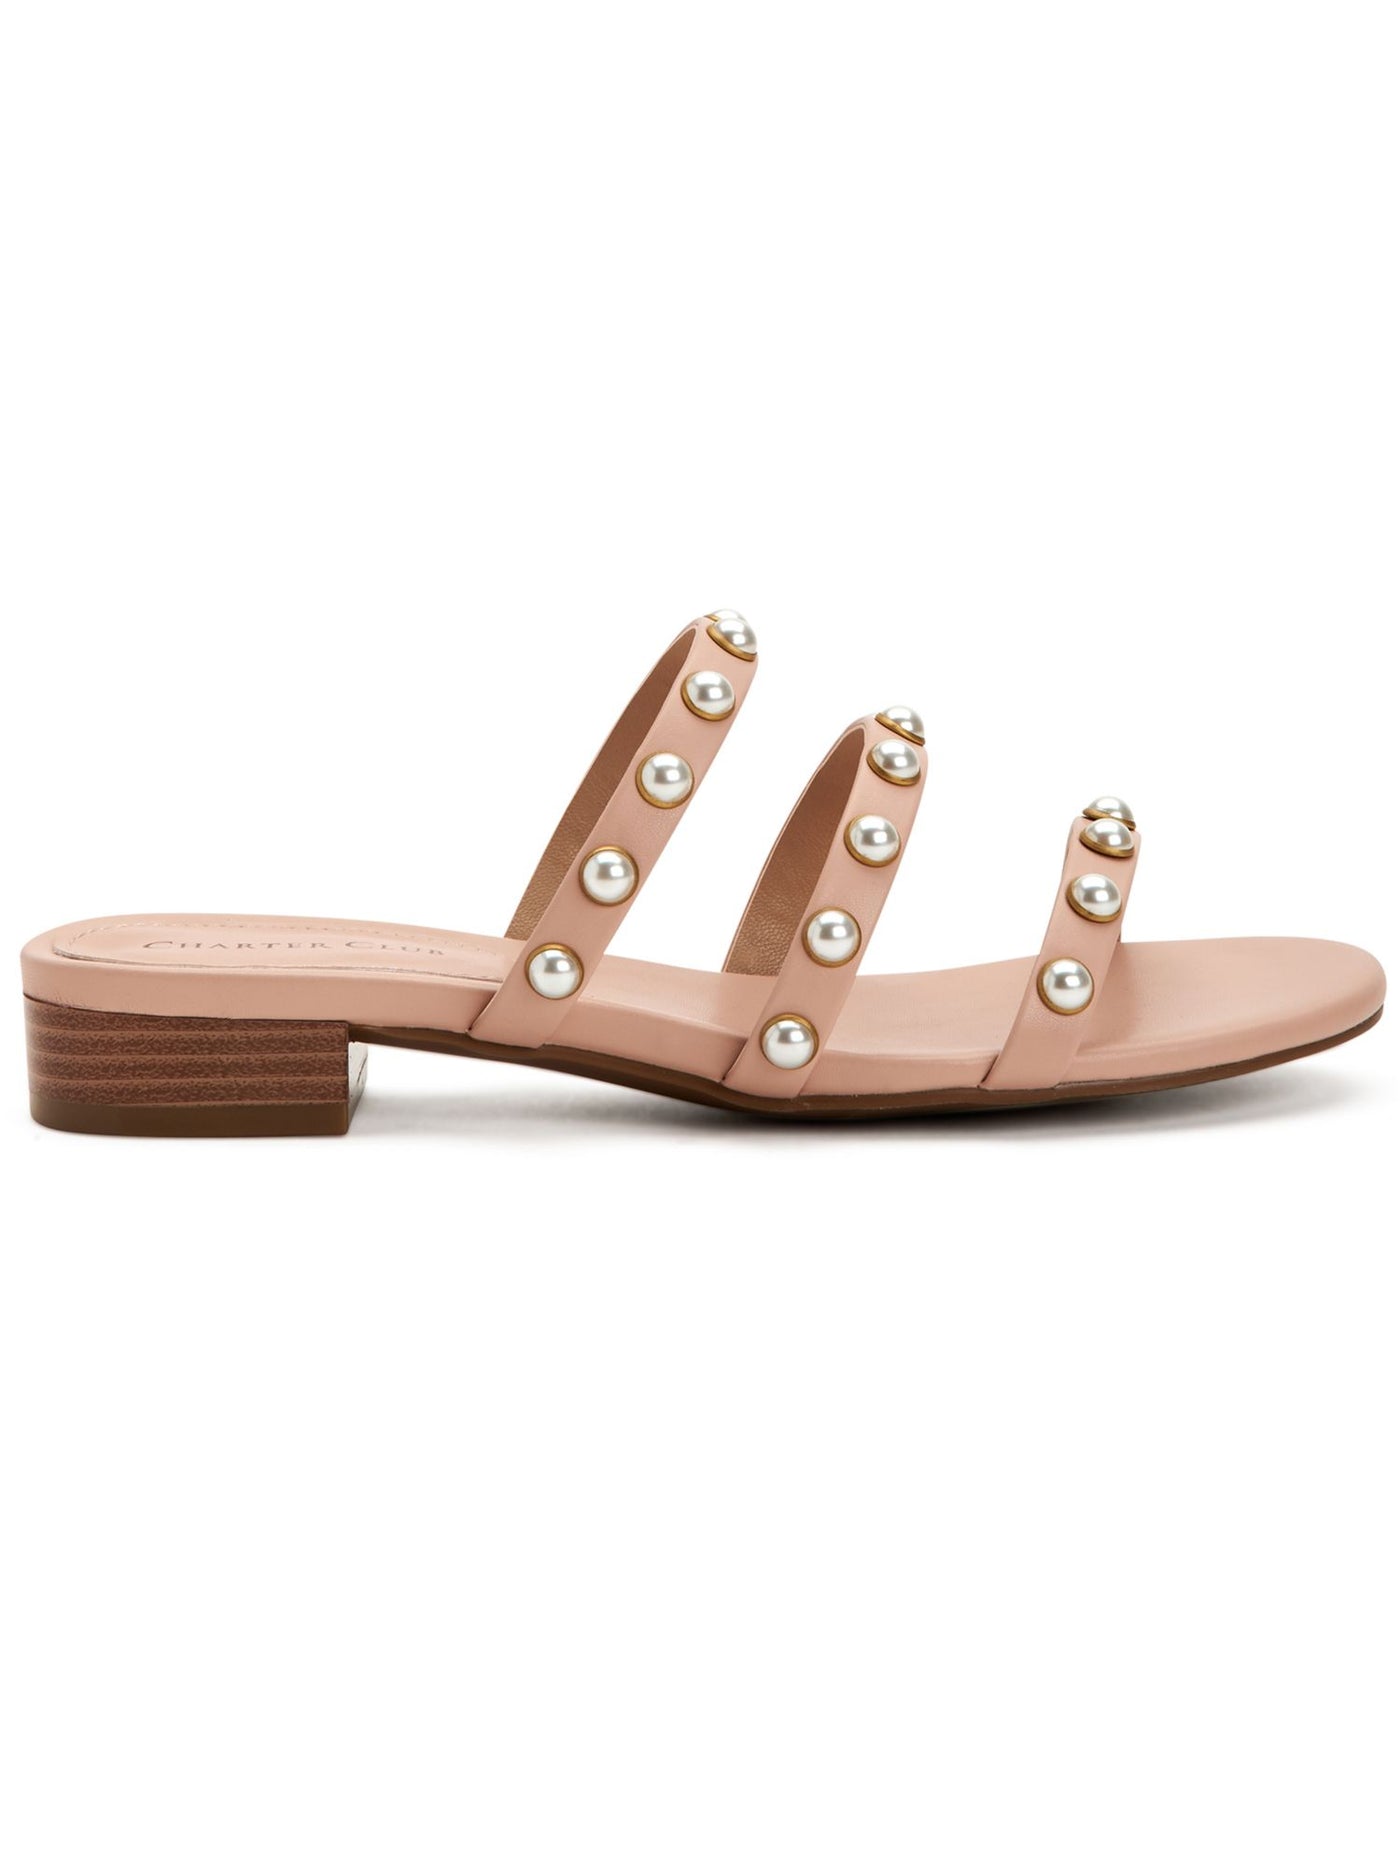 CHARTER CLUB Womens Pink Imitation Pearls Soraya Almond Toe Block Heel Slip On Sandals Shoes 6 M